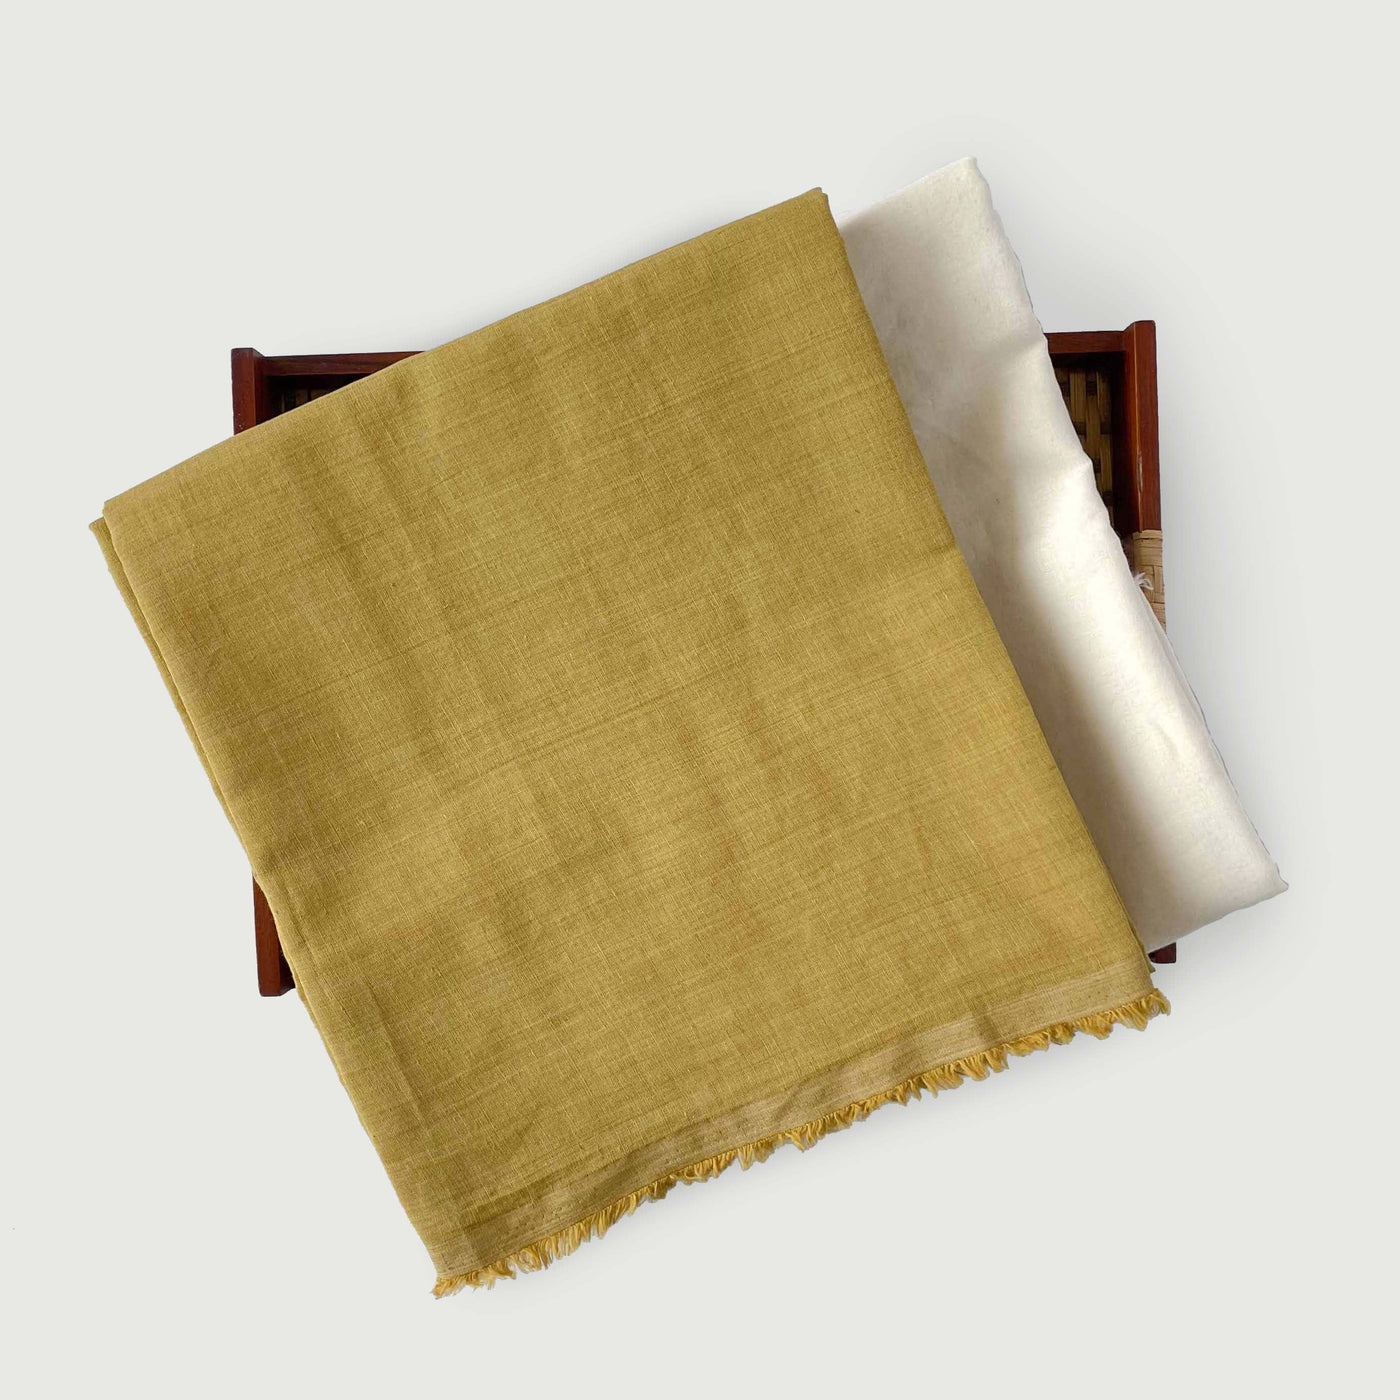 Blended Silk Linen Kurta Set Kurta Set Unisex Mustard Yellow Color | Blended Silk Linen Kurta Fabric (1.80 Meters) | And Cotton Pyjama (2.5 Meters) | Unstitched Combo Set